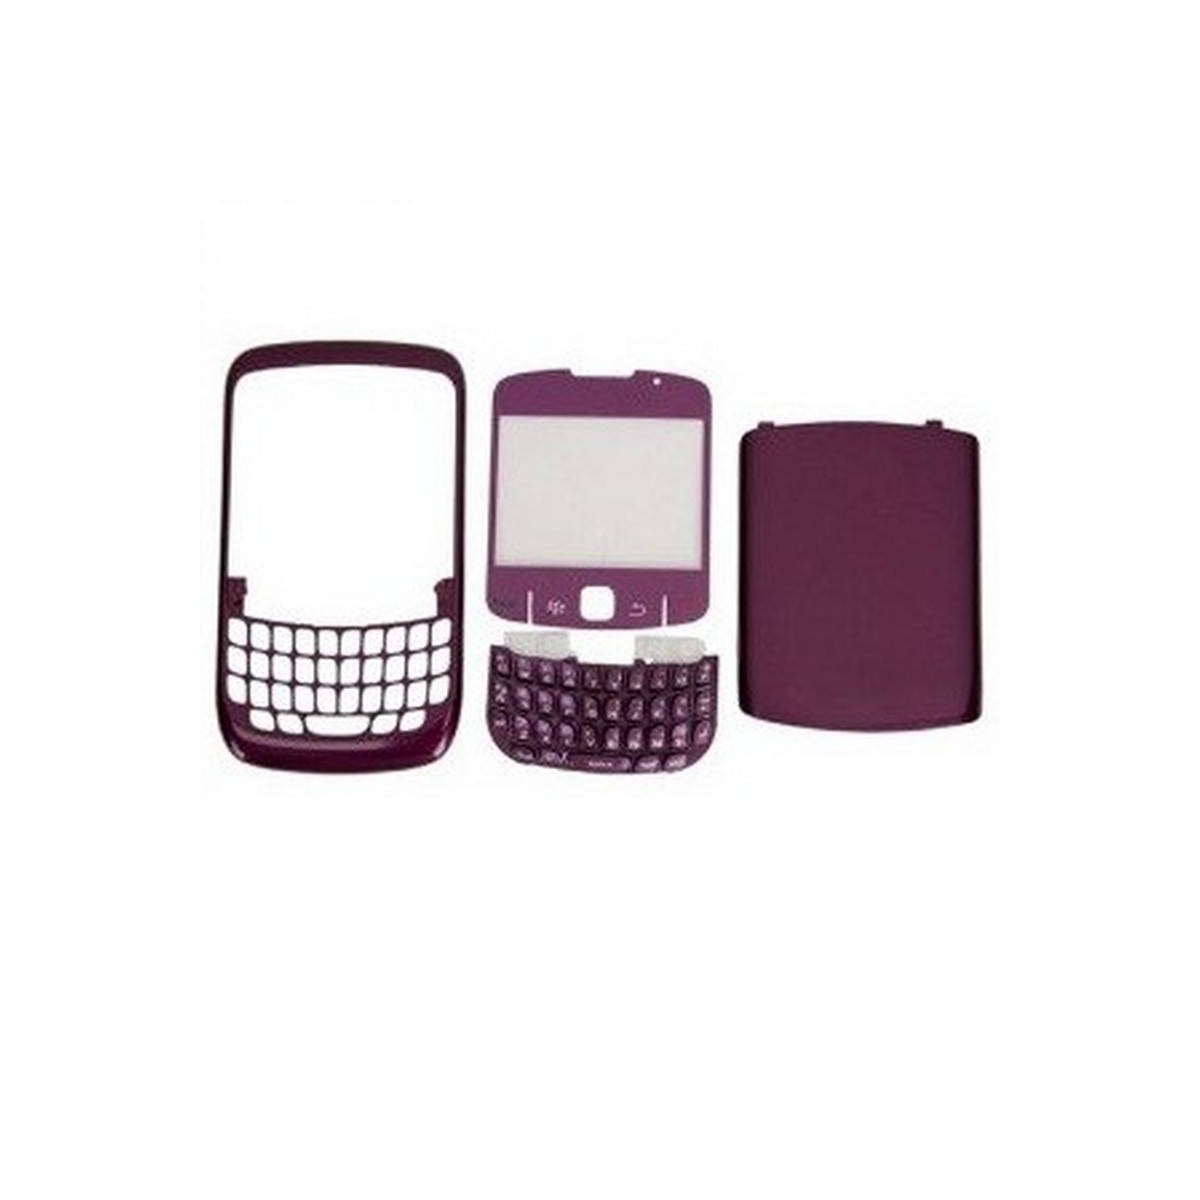 Carcaça BlackBerry 8520 MORADO